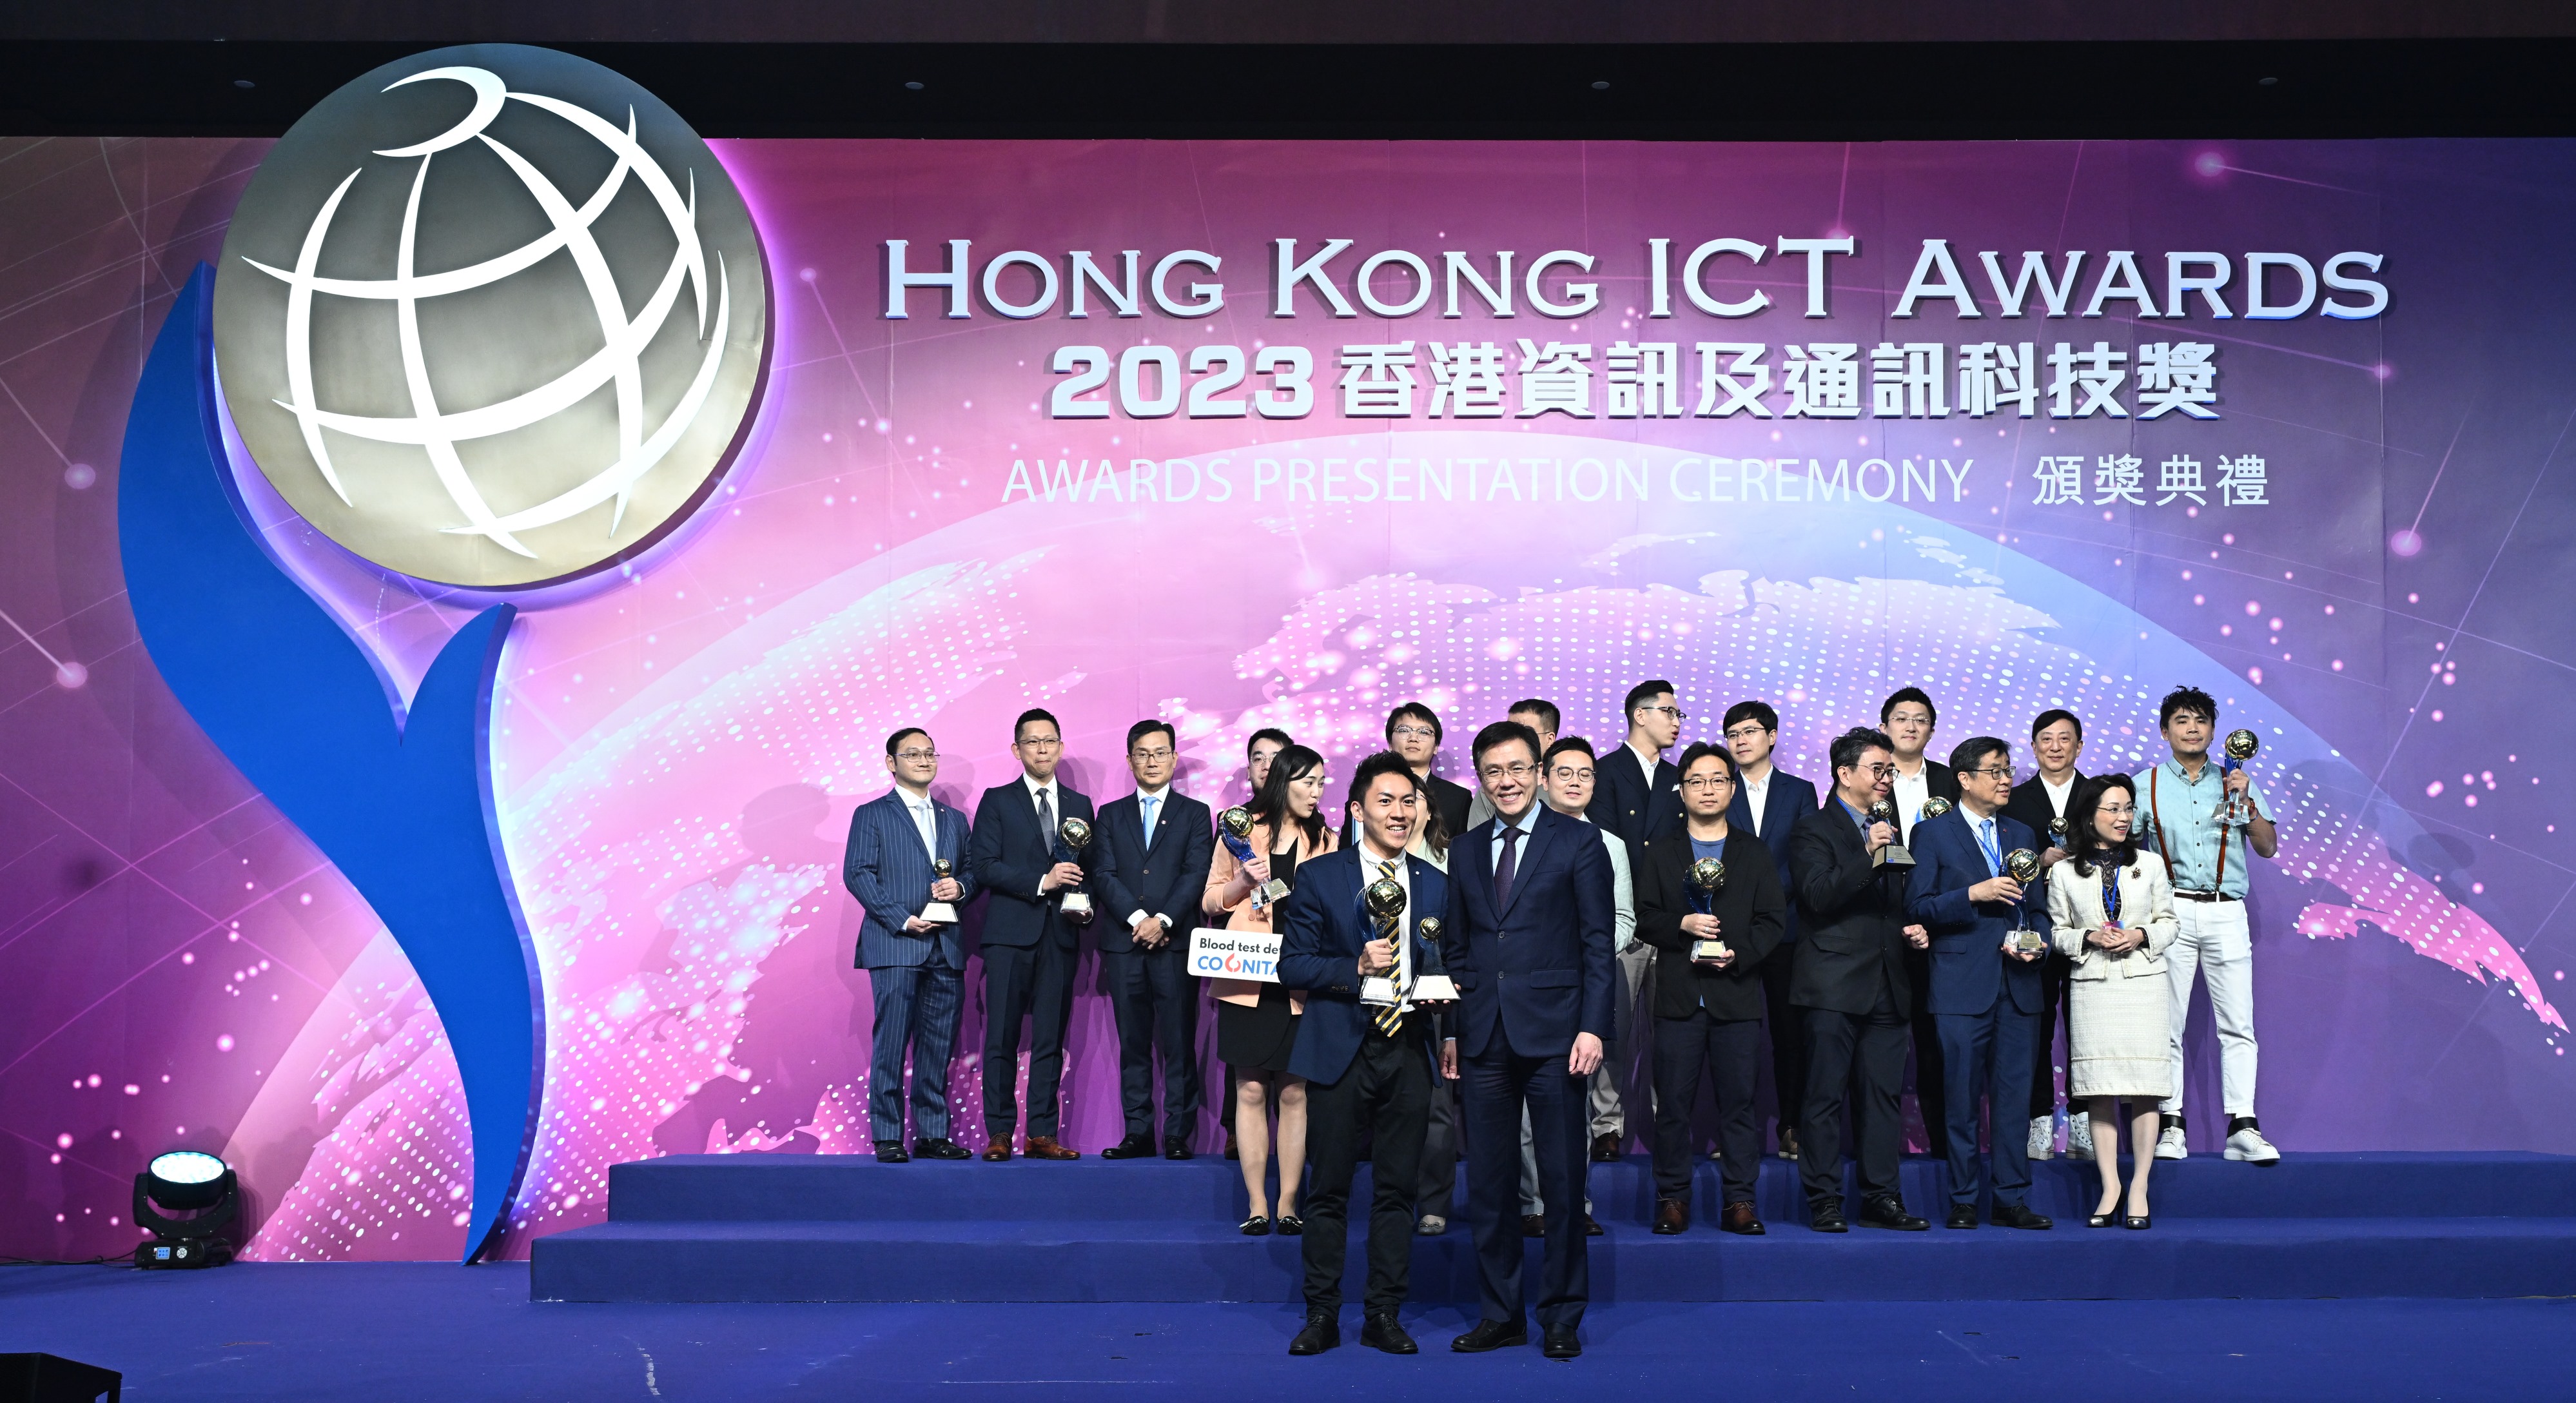 Hong Kong ICT Awards 2023 Student Innovation Grand Award Winner